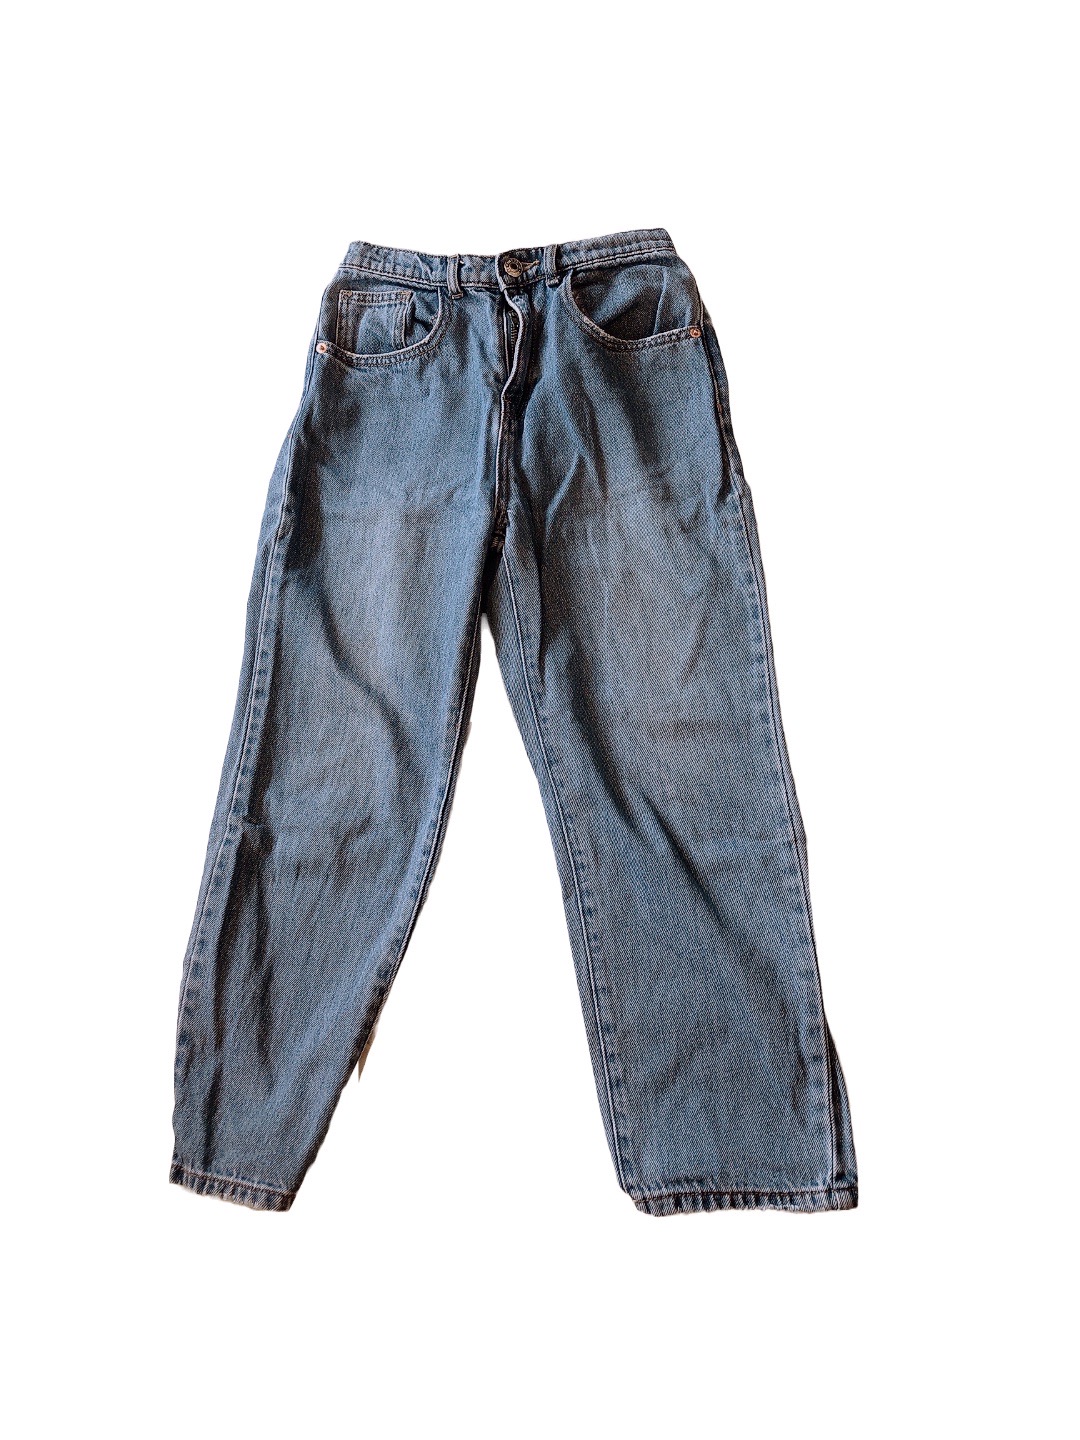 《NET》藍色兒童牛仔褲(14)
NT$89